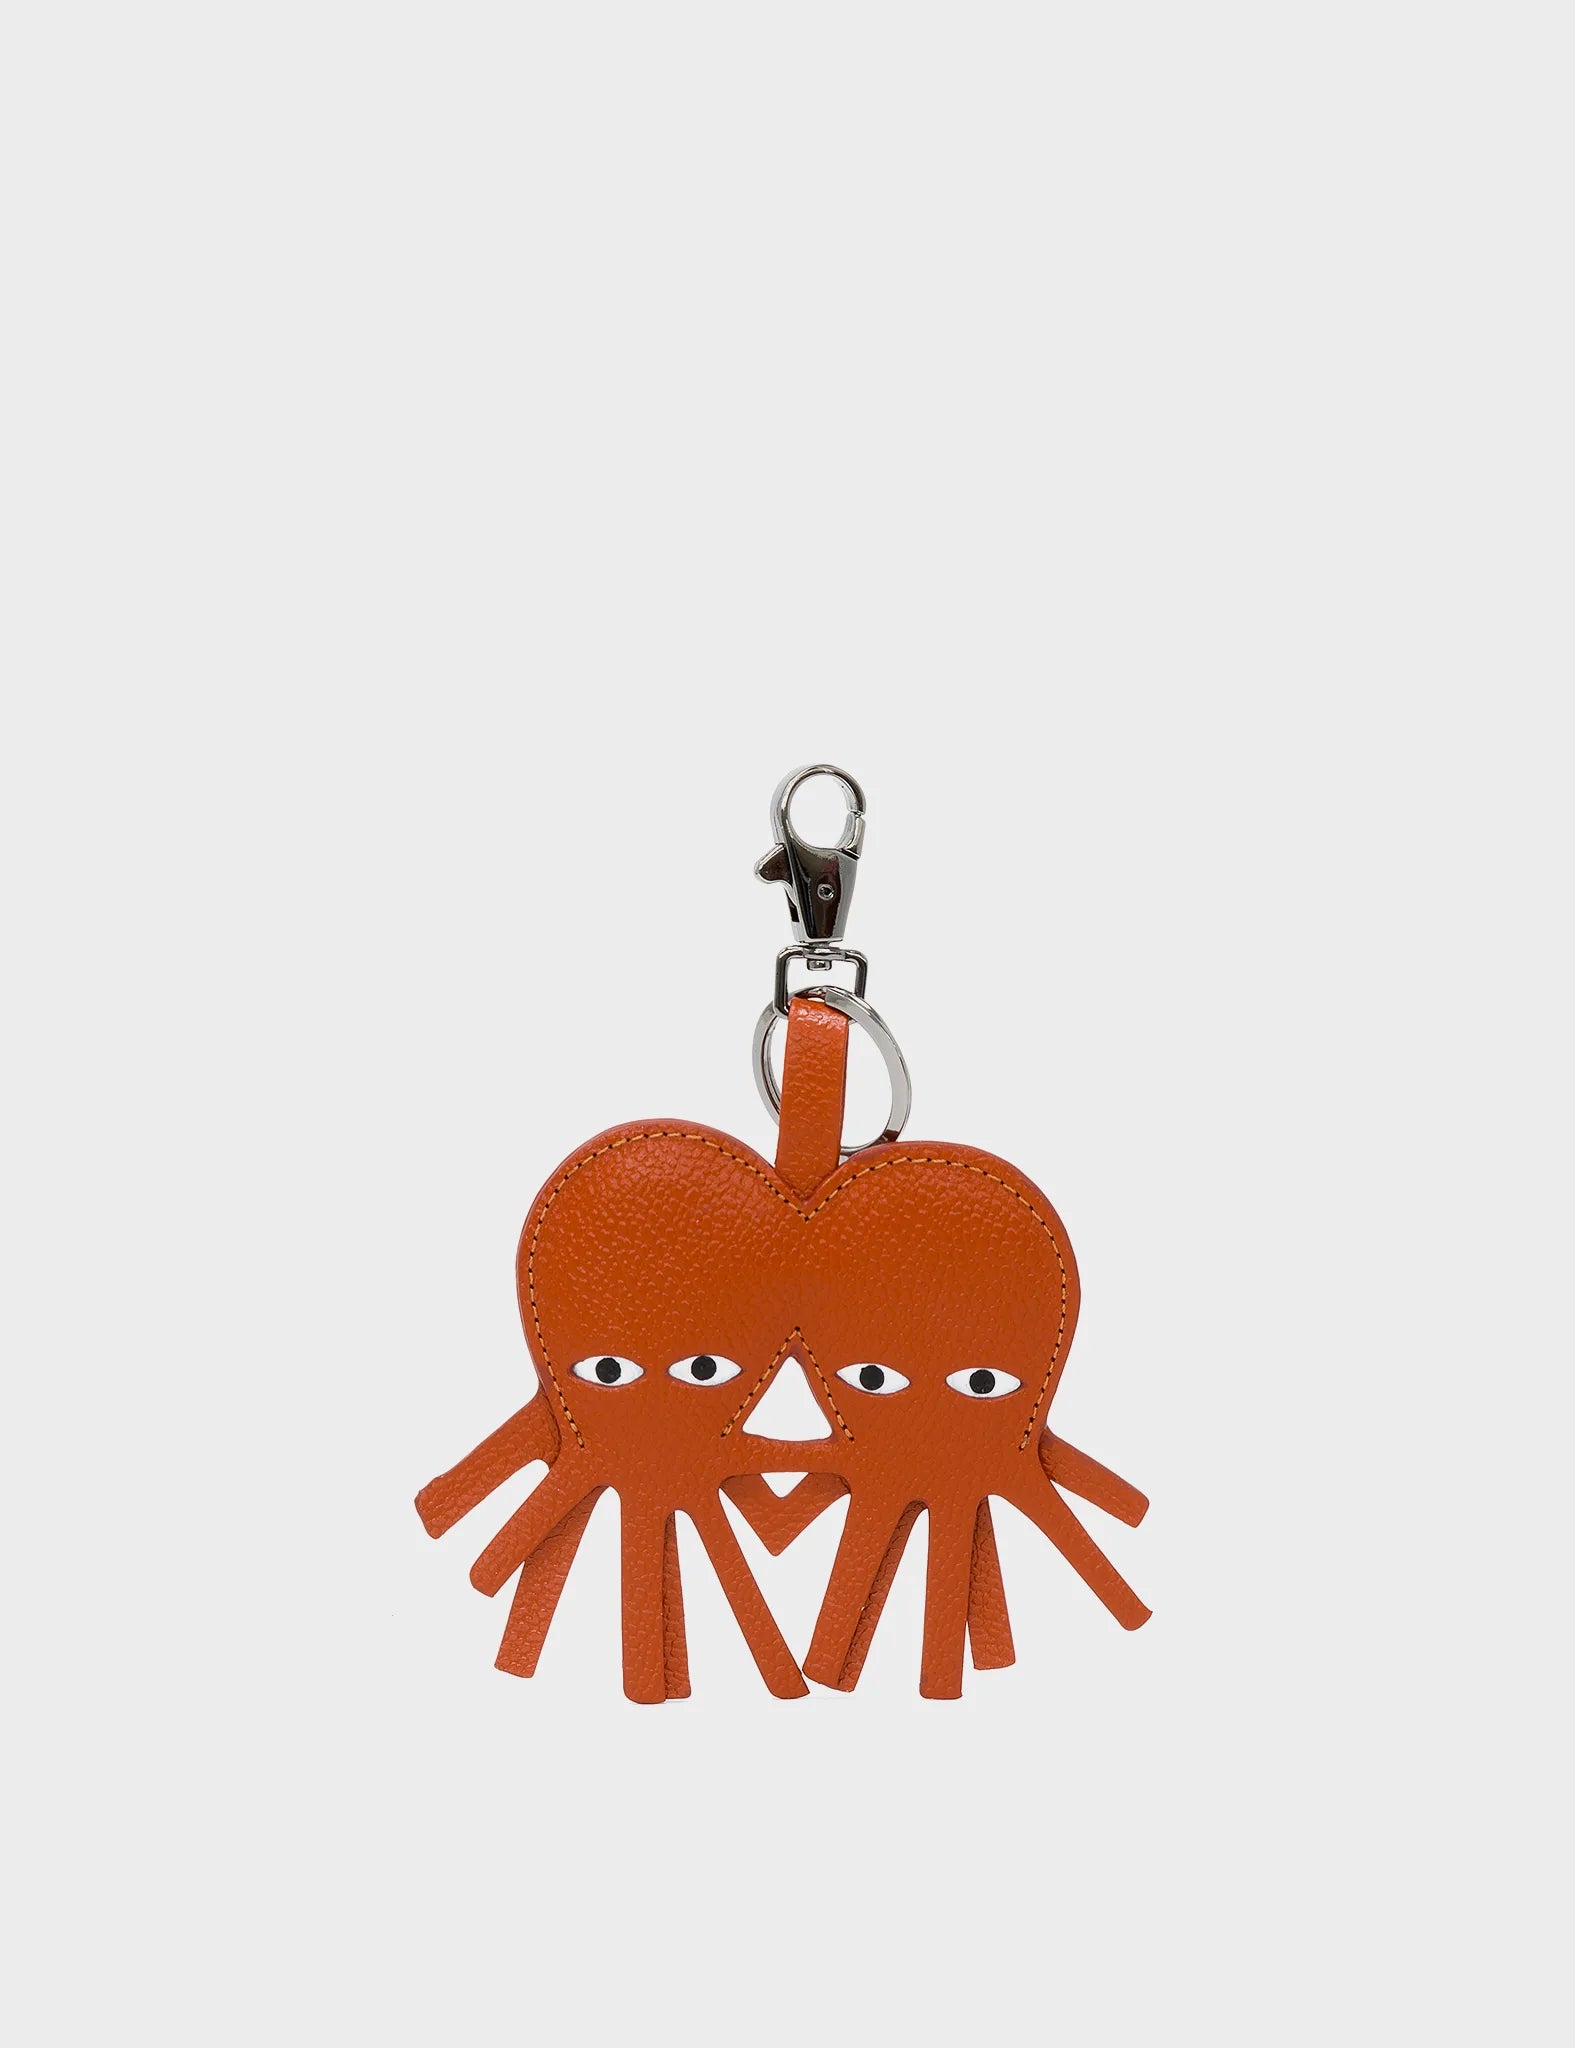 Twin Octopus Charm - Cinnamon Leather Keychain